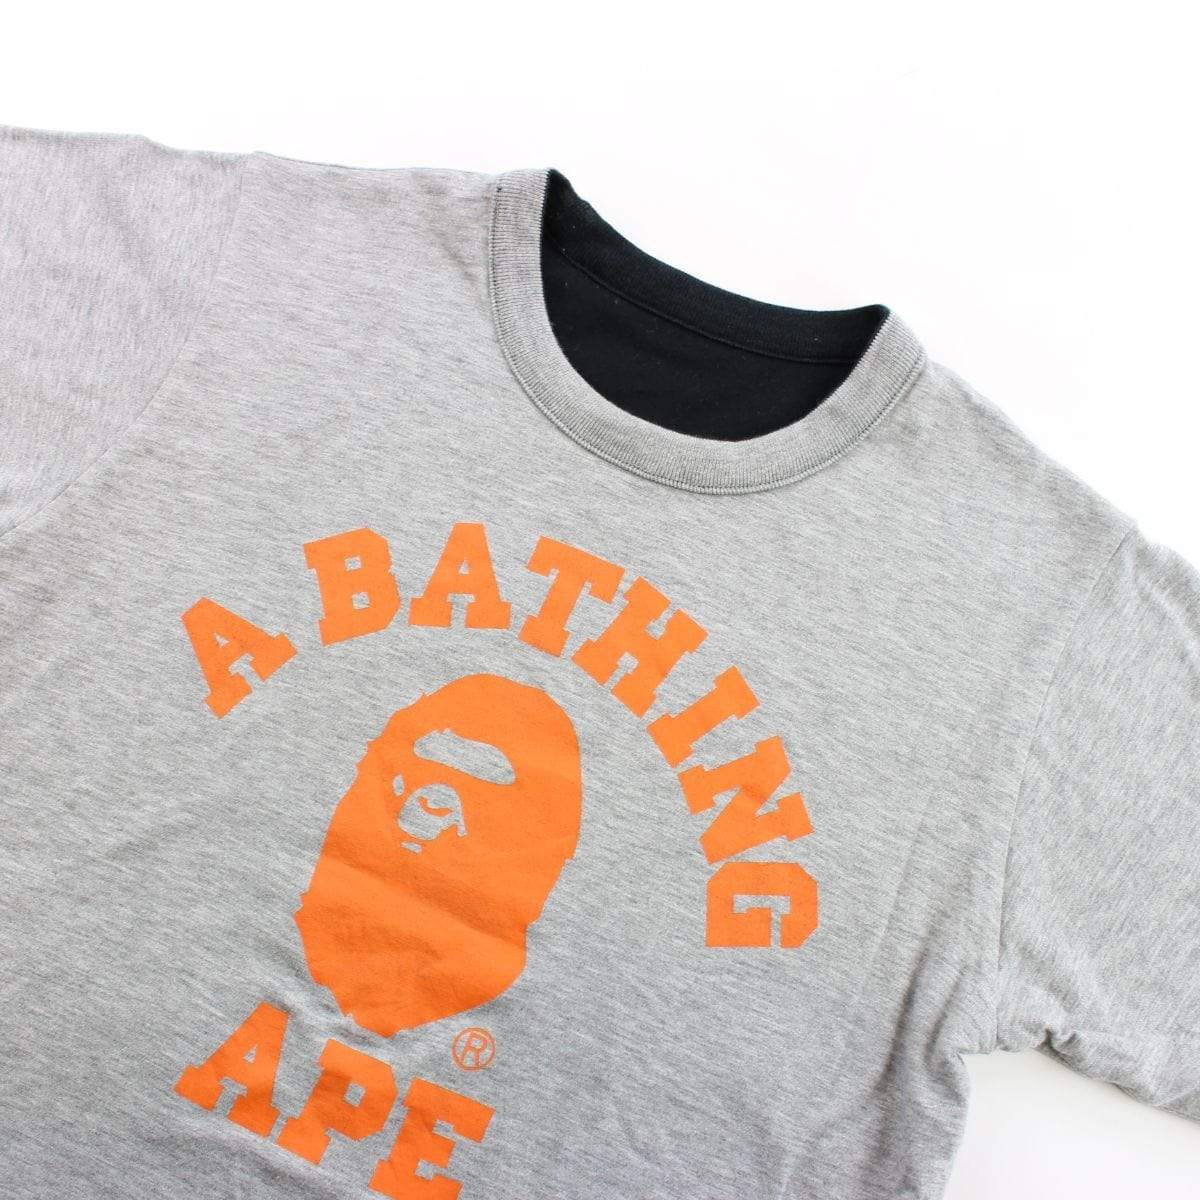 Bape Orange College Logo Reversible Tee Grey - SaruGeneral